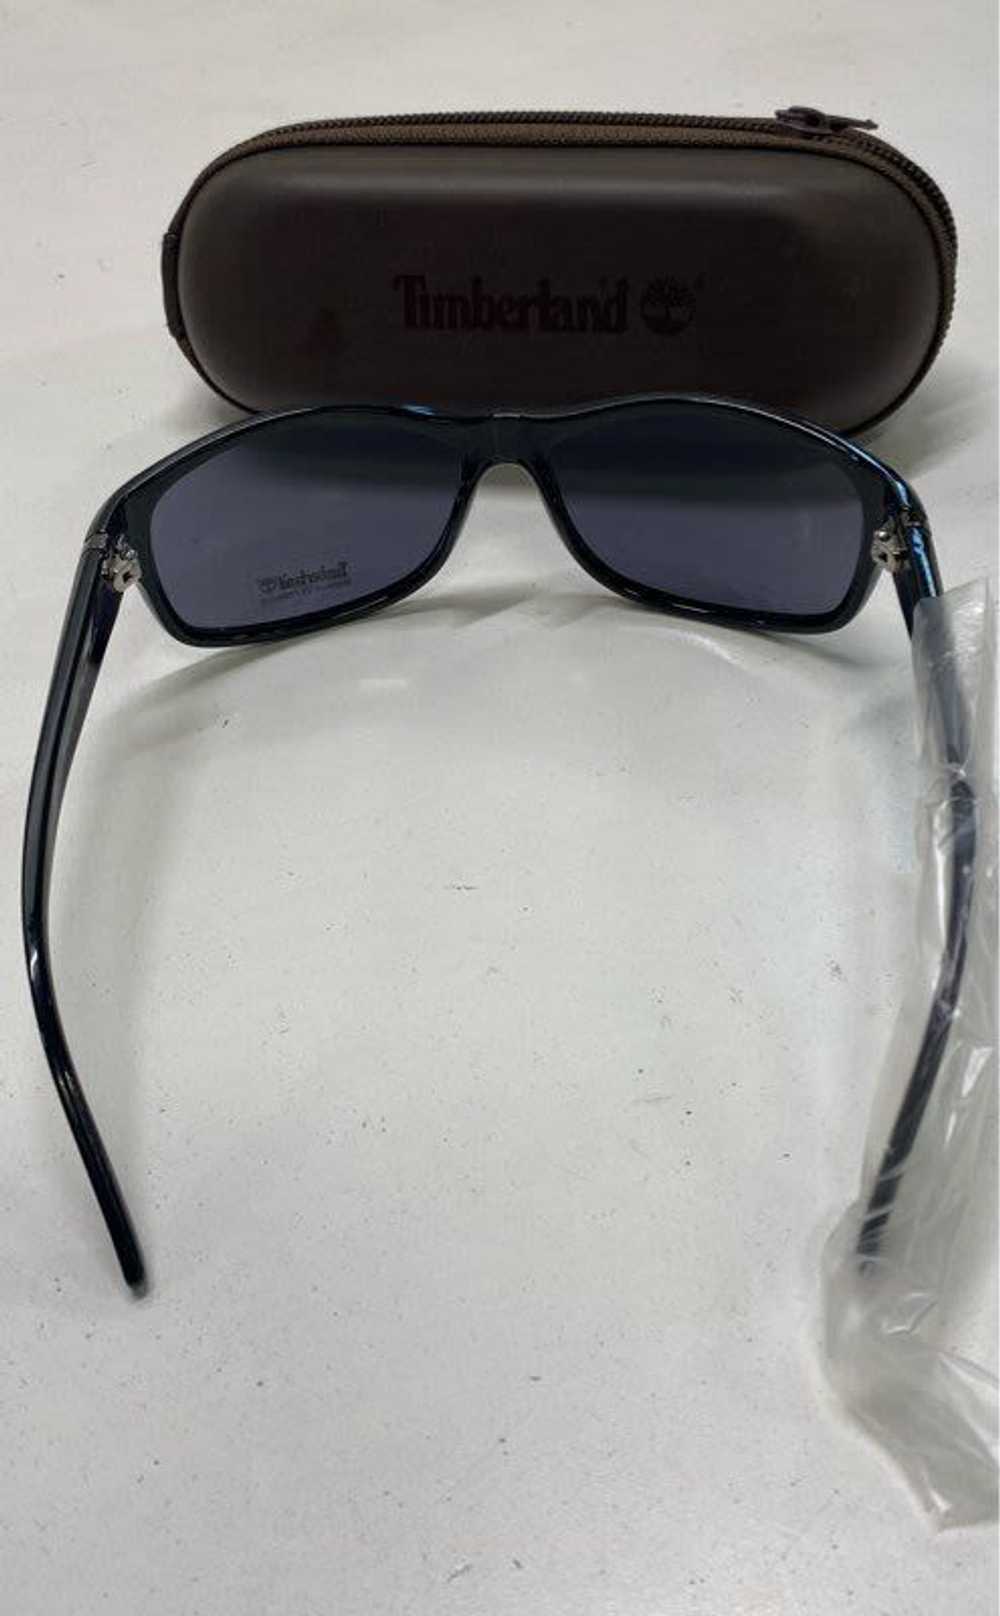 Timberland Black Sunglasses - Size One Size - image 4